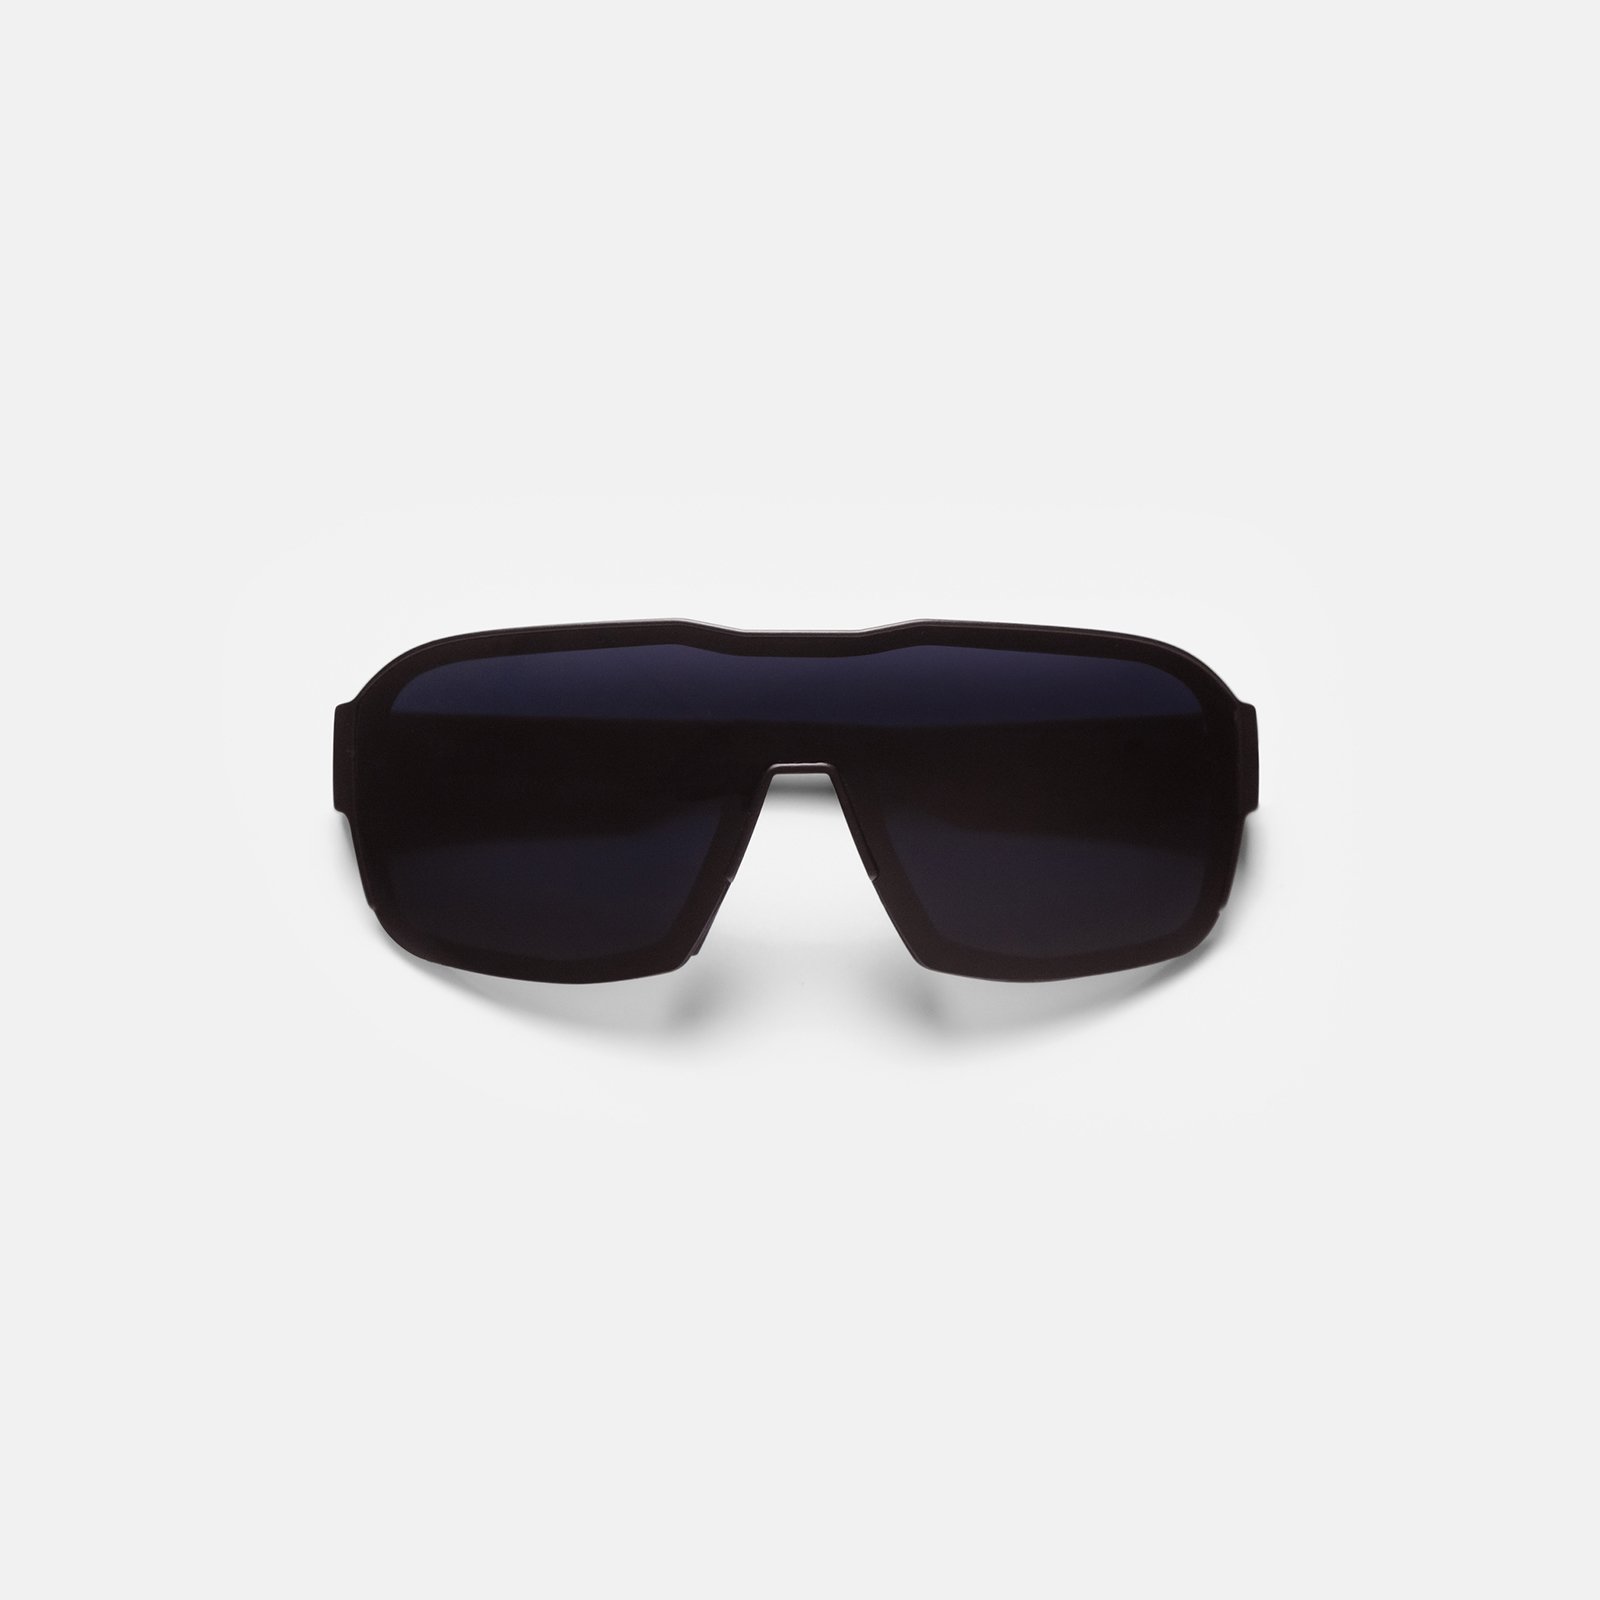 солнцезащитные очки White Lab Thor  (Thor-black)  - цена, описание, фото 1